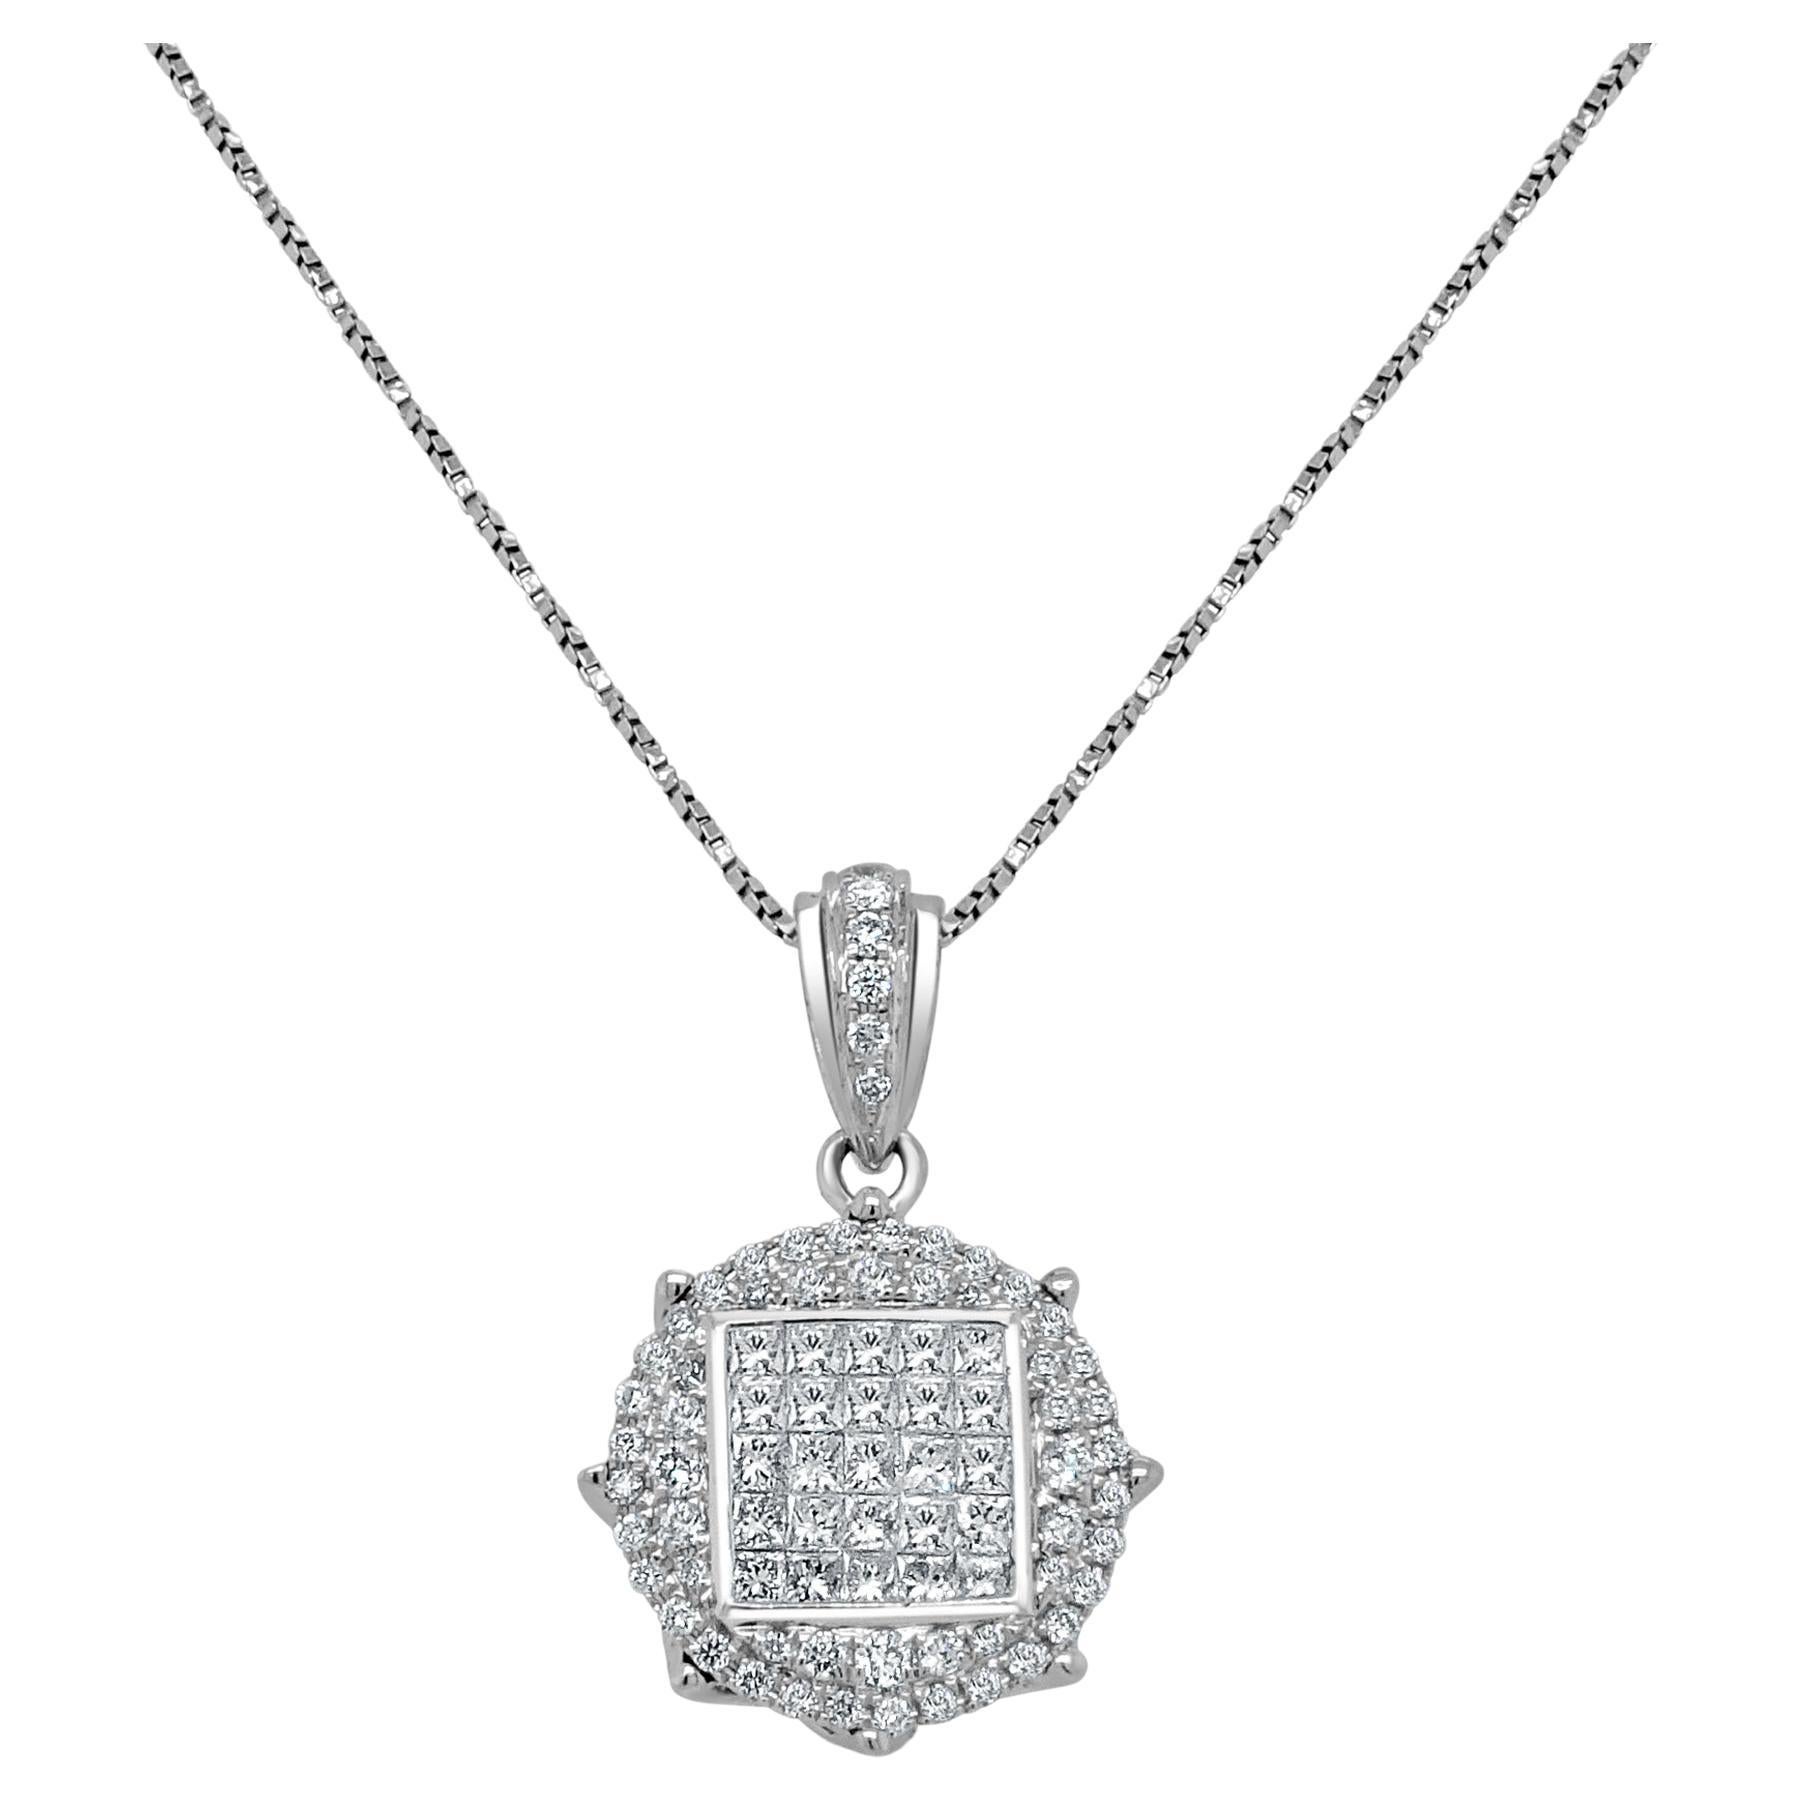 Collier pendentif en or blanc 18 carats avec diamants de 3/4 carat